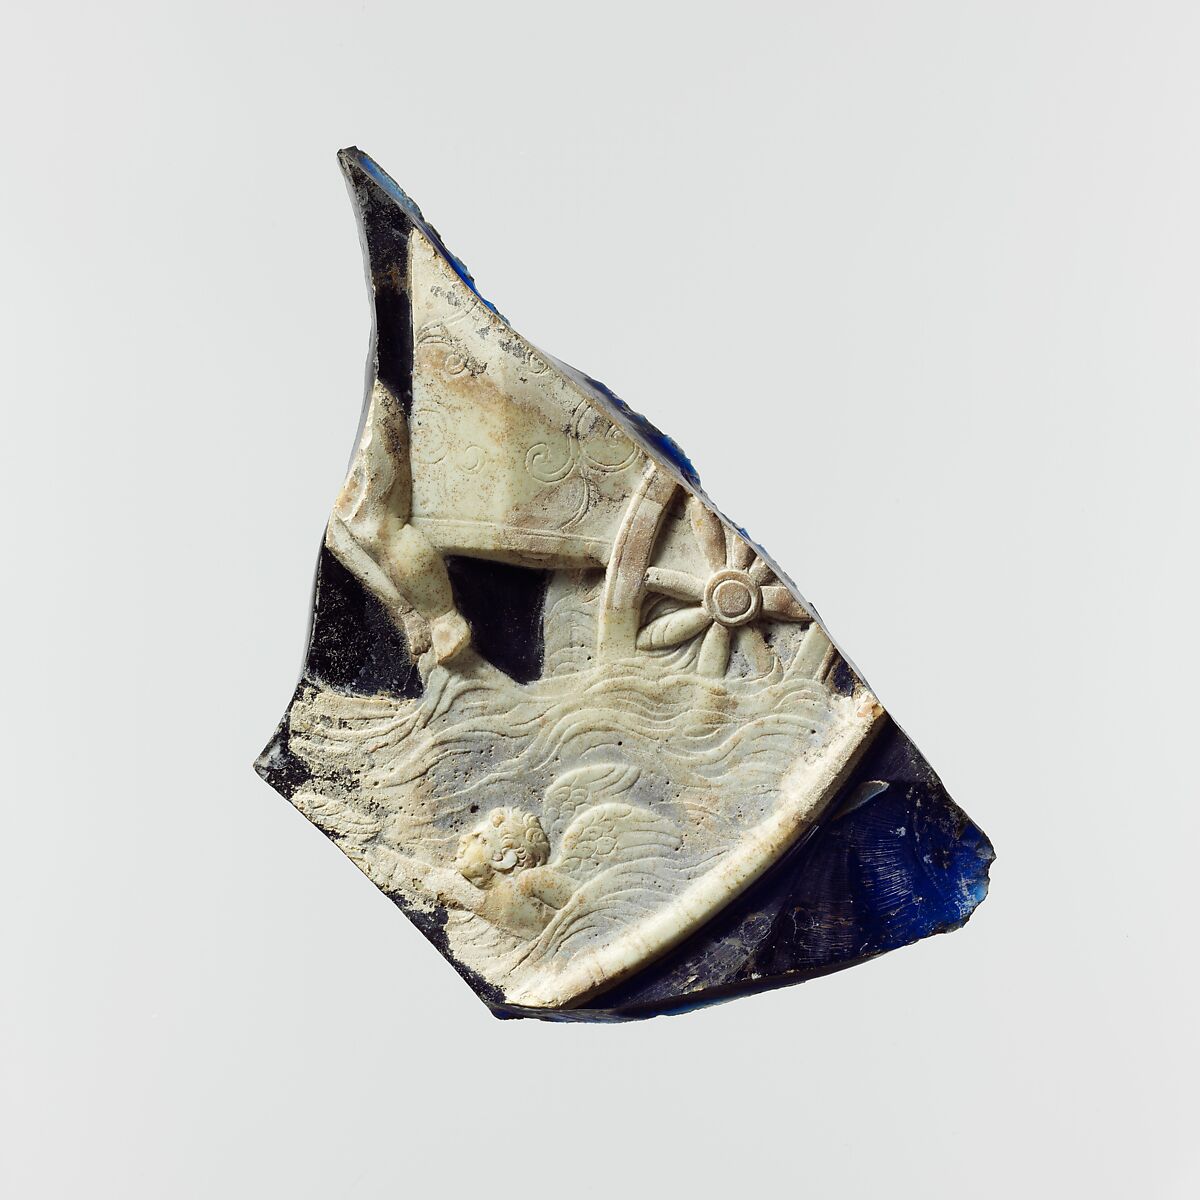 Glass cameo plate fragment, Glass, Roman